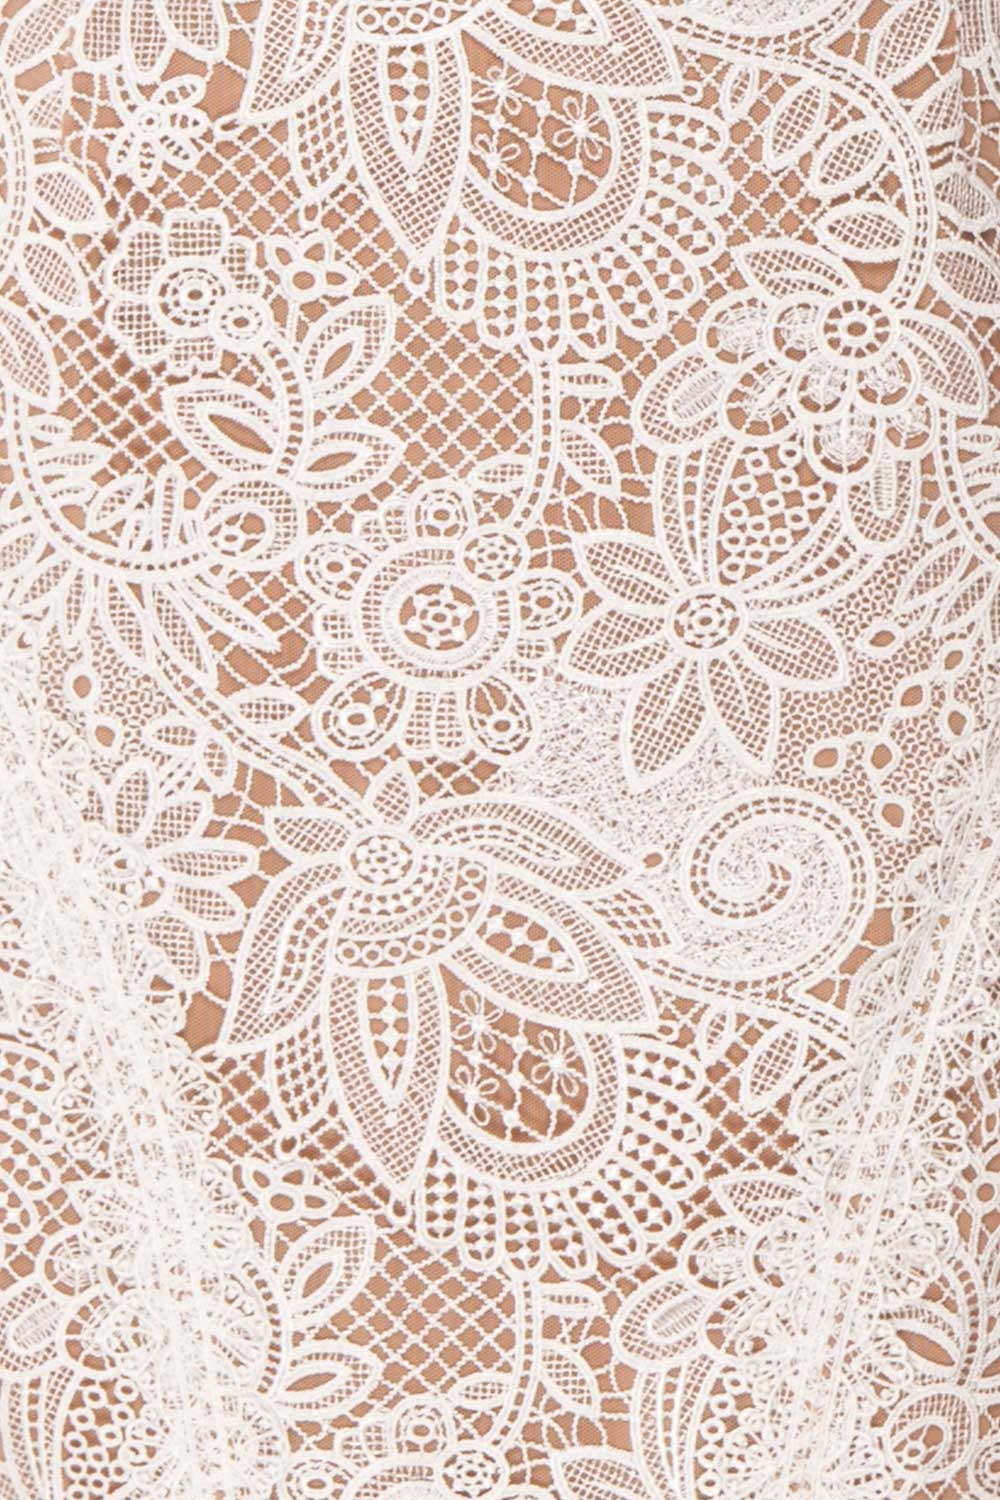 Cipoletti | Lace Bridal Dress